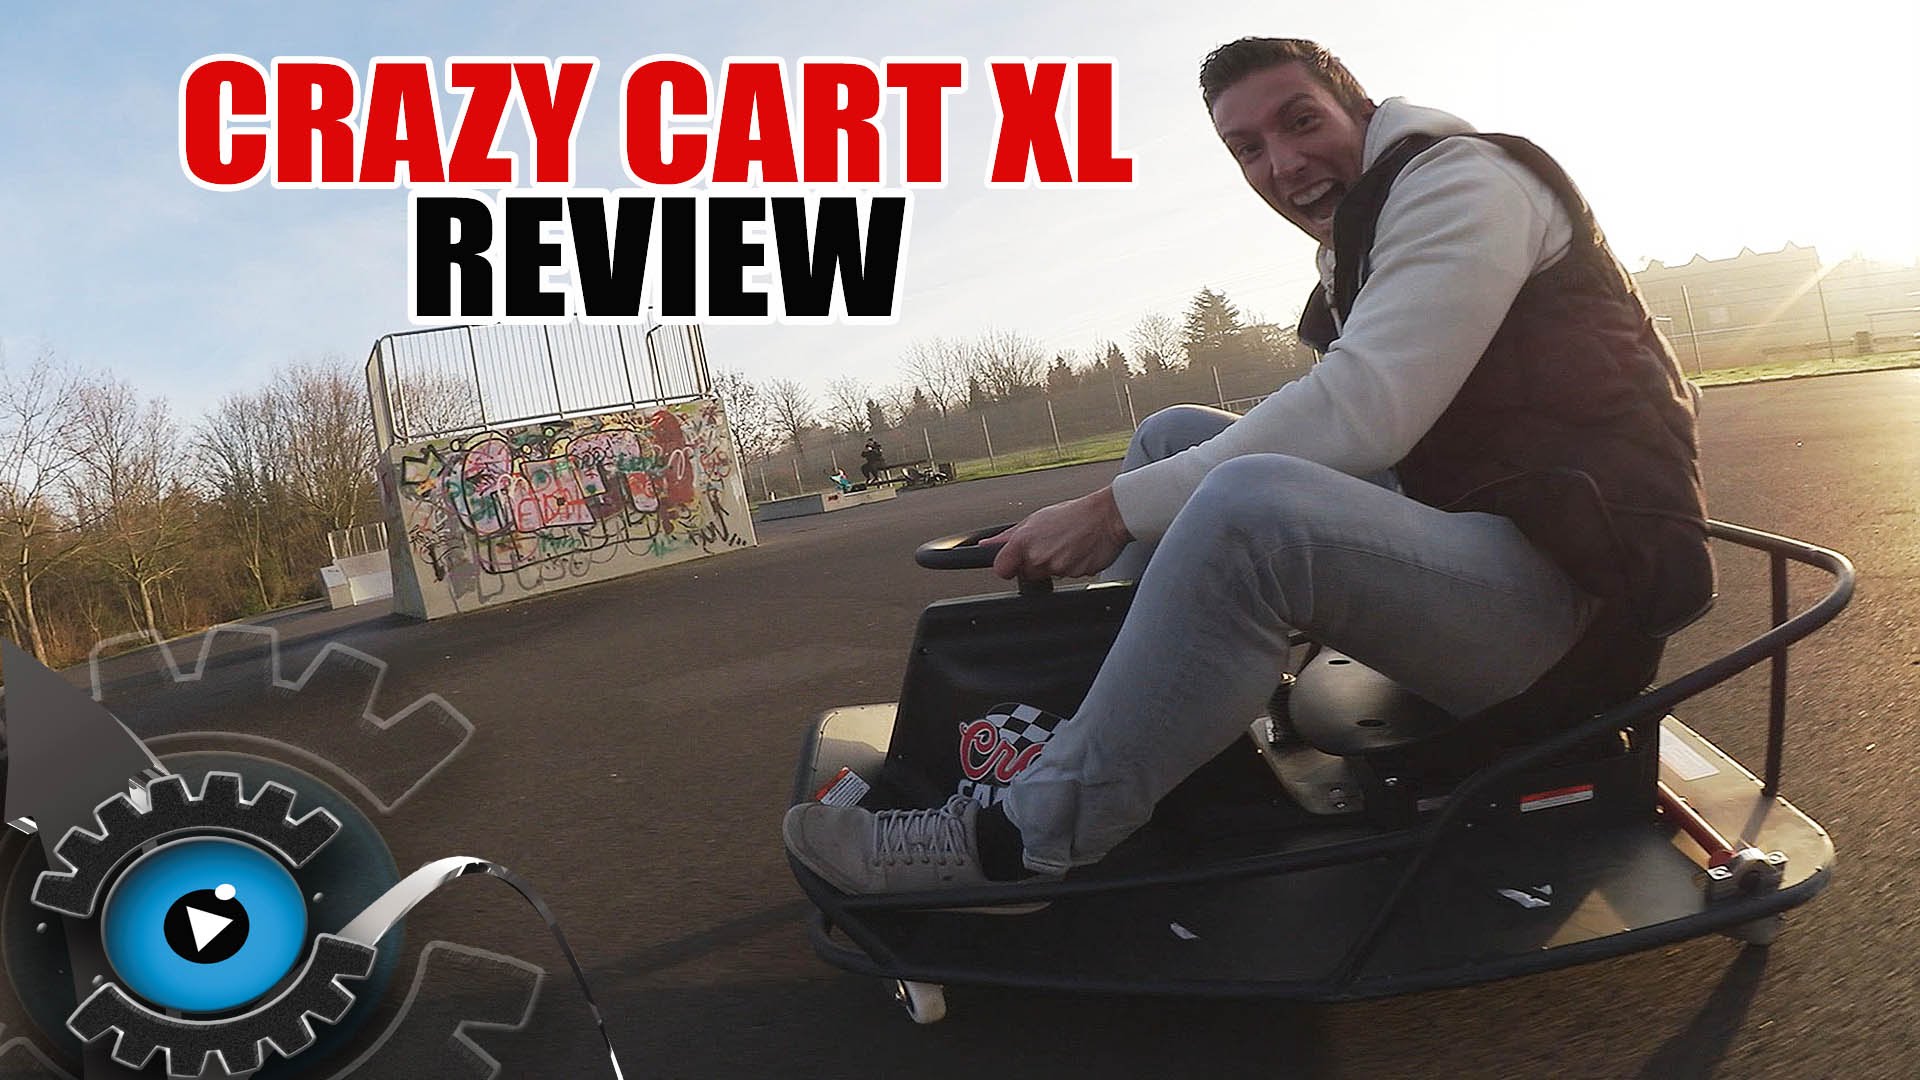 Taxi garage crazy cart. Дрифт-карт Razor Crazy Cart. Razor Crazy Cart XL. Crazy Cart Вегас. Crazy Cart инструктаж.